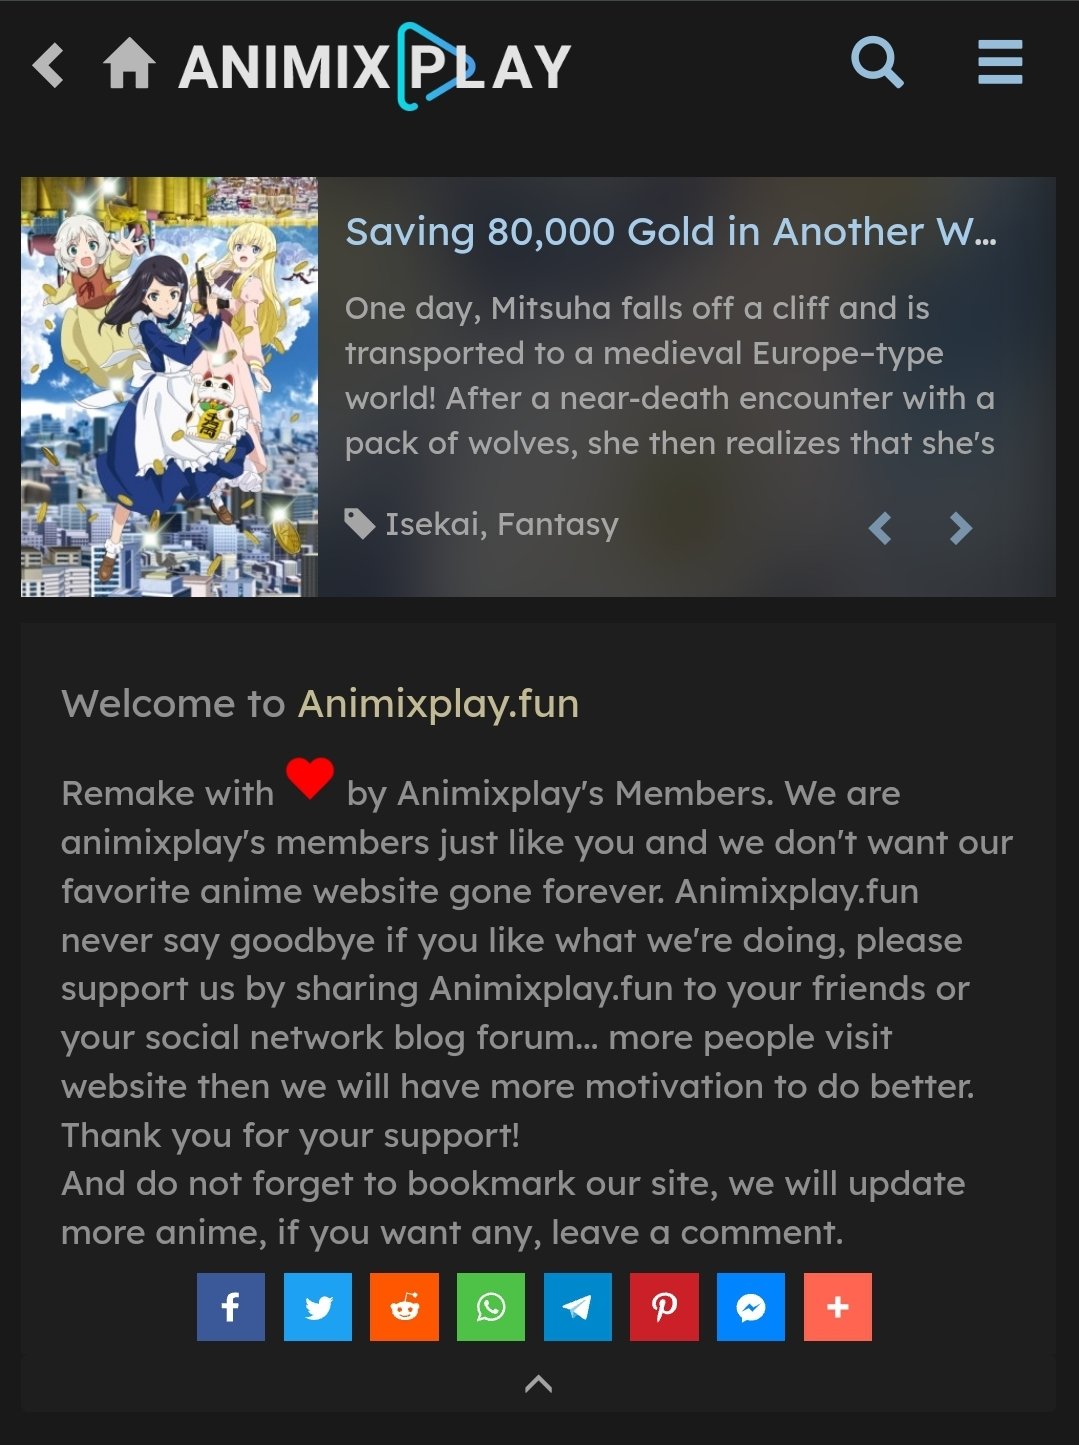 Experience Anime Bliss on AnimixPlay